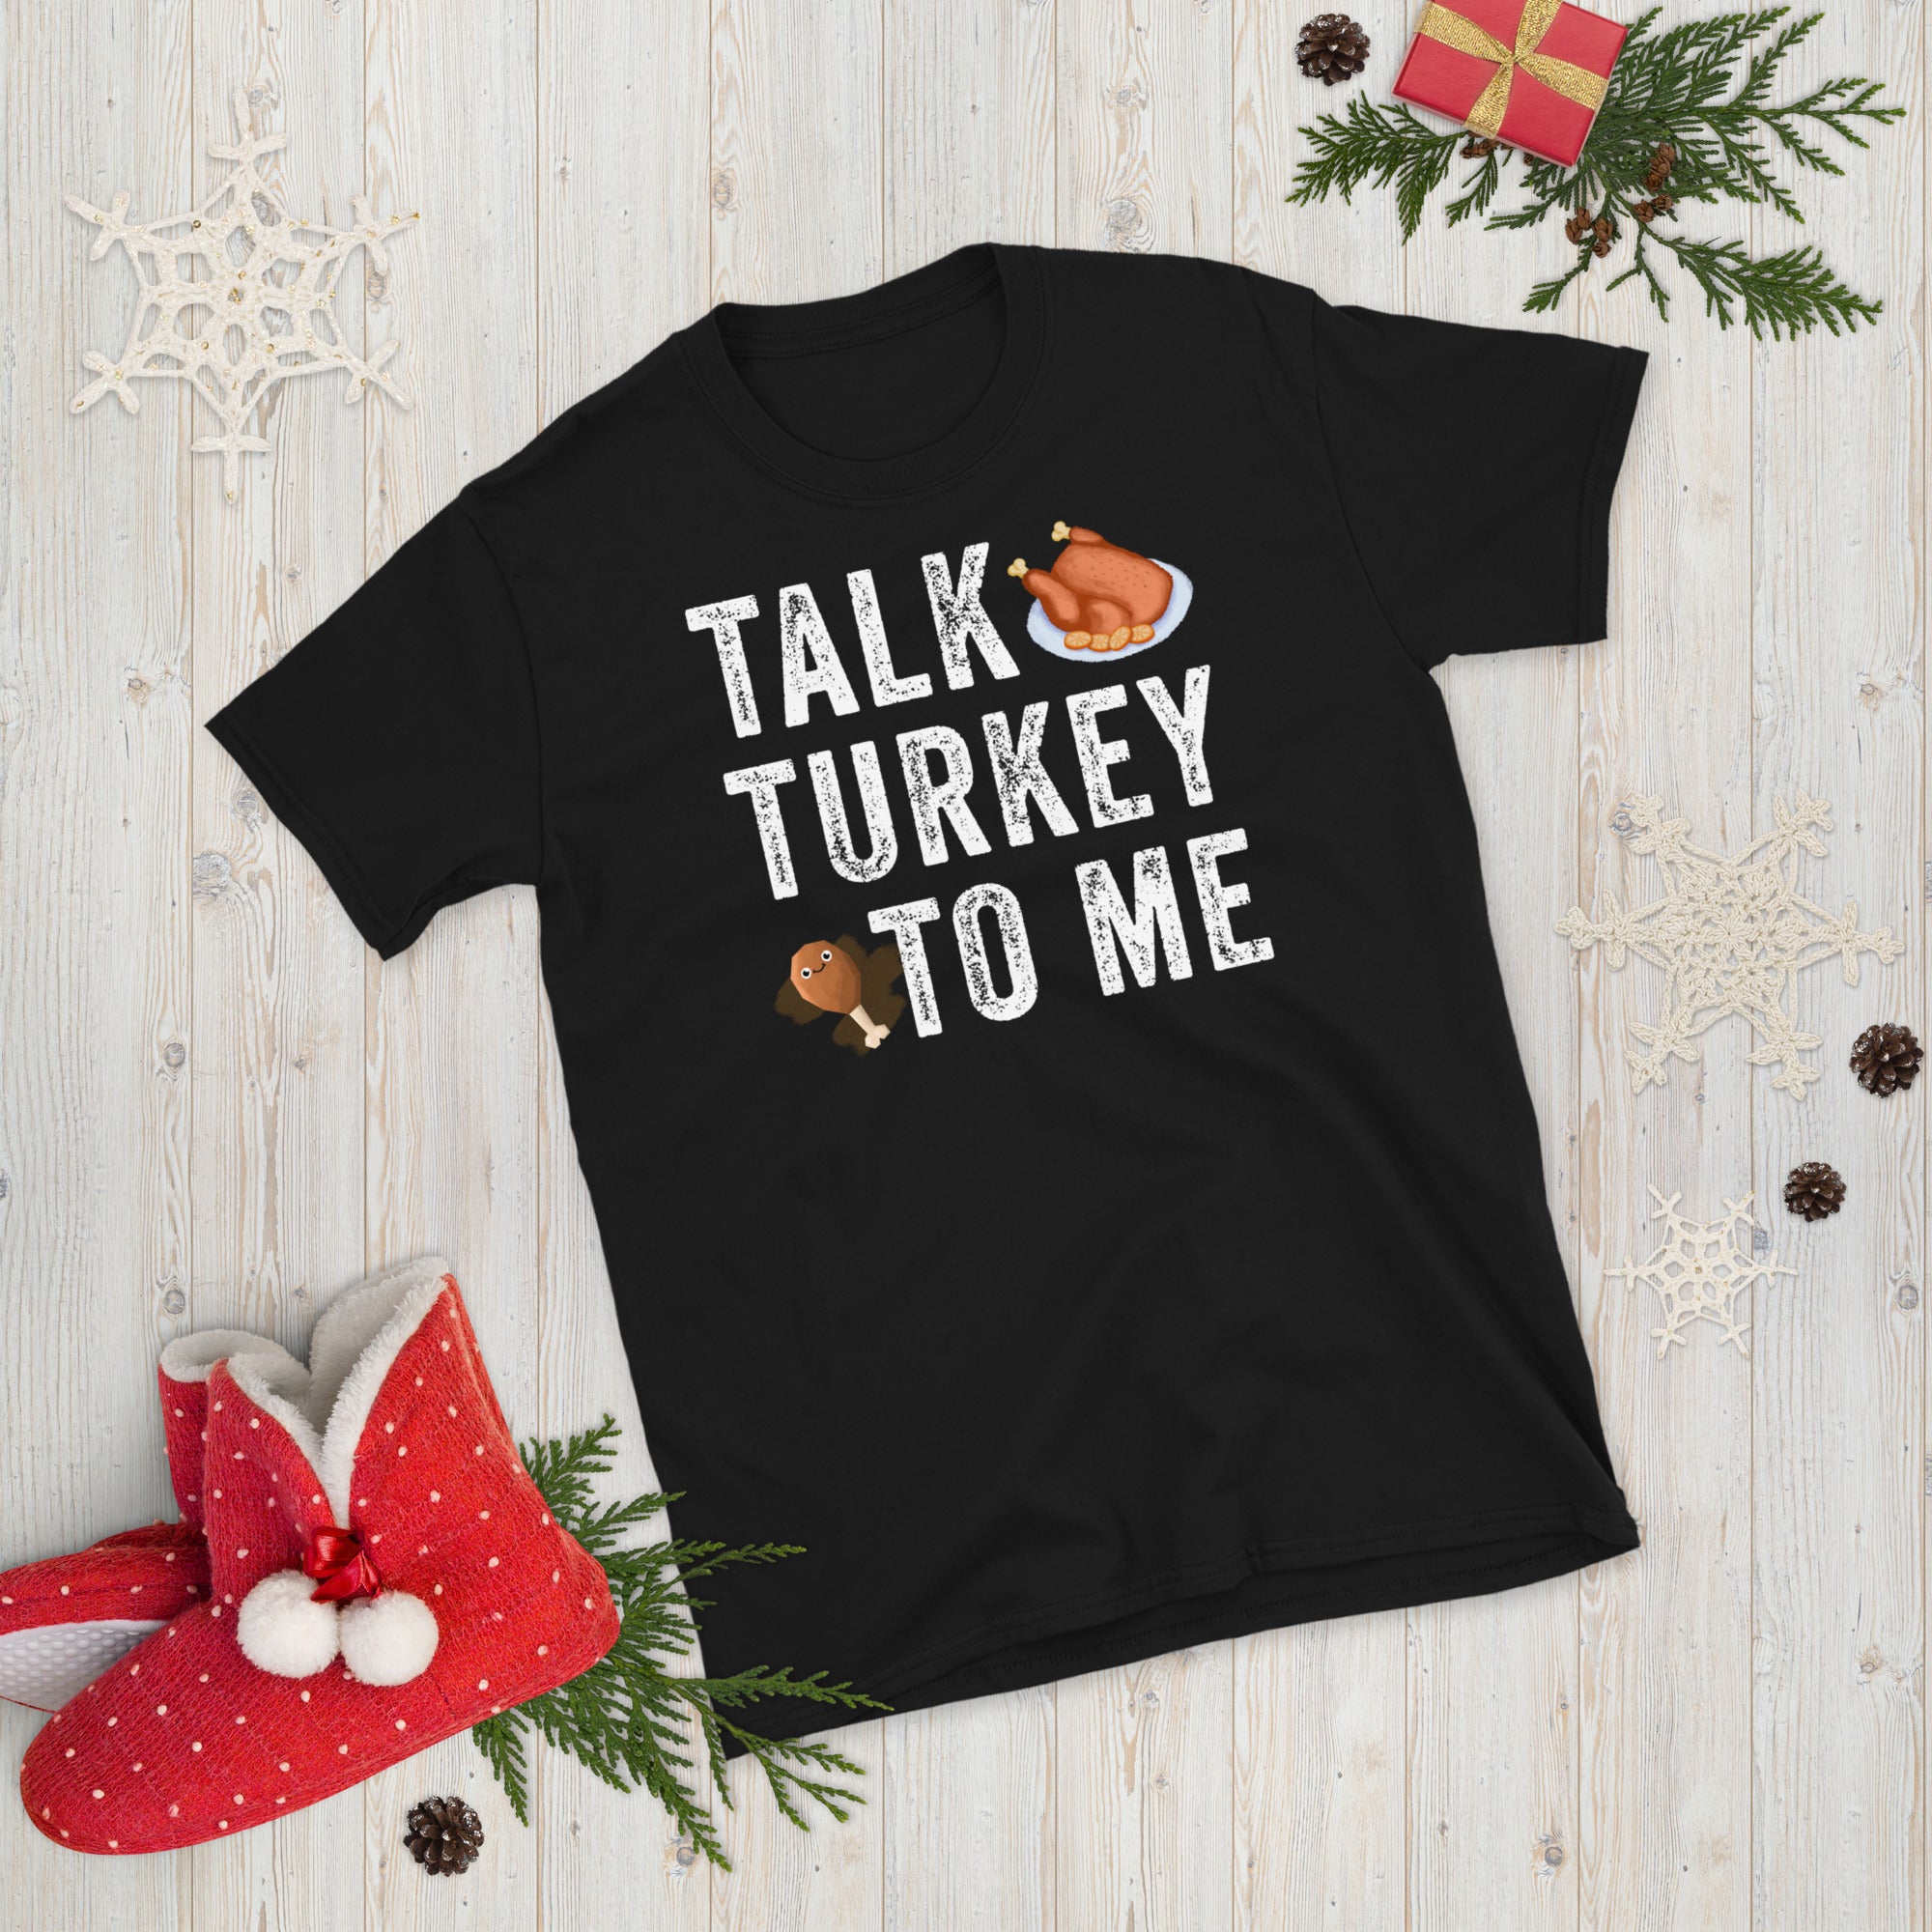 Talk Turkey To Me, Thanksgiving Shirt, Funny Thanksgiving Shirt, Women&#39;s Thanksgiving Shirt, Funny Turkey T Shirt, Turkey Leg Day, Turkey T - Madeinsea©